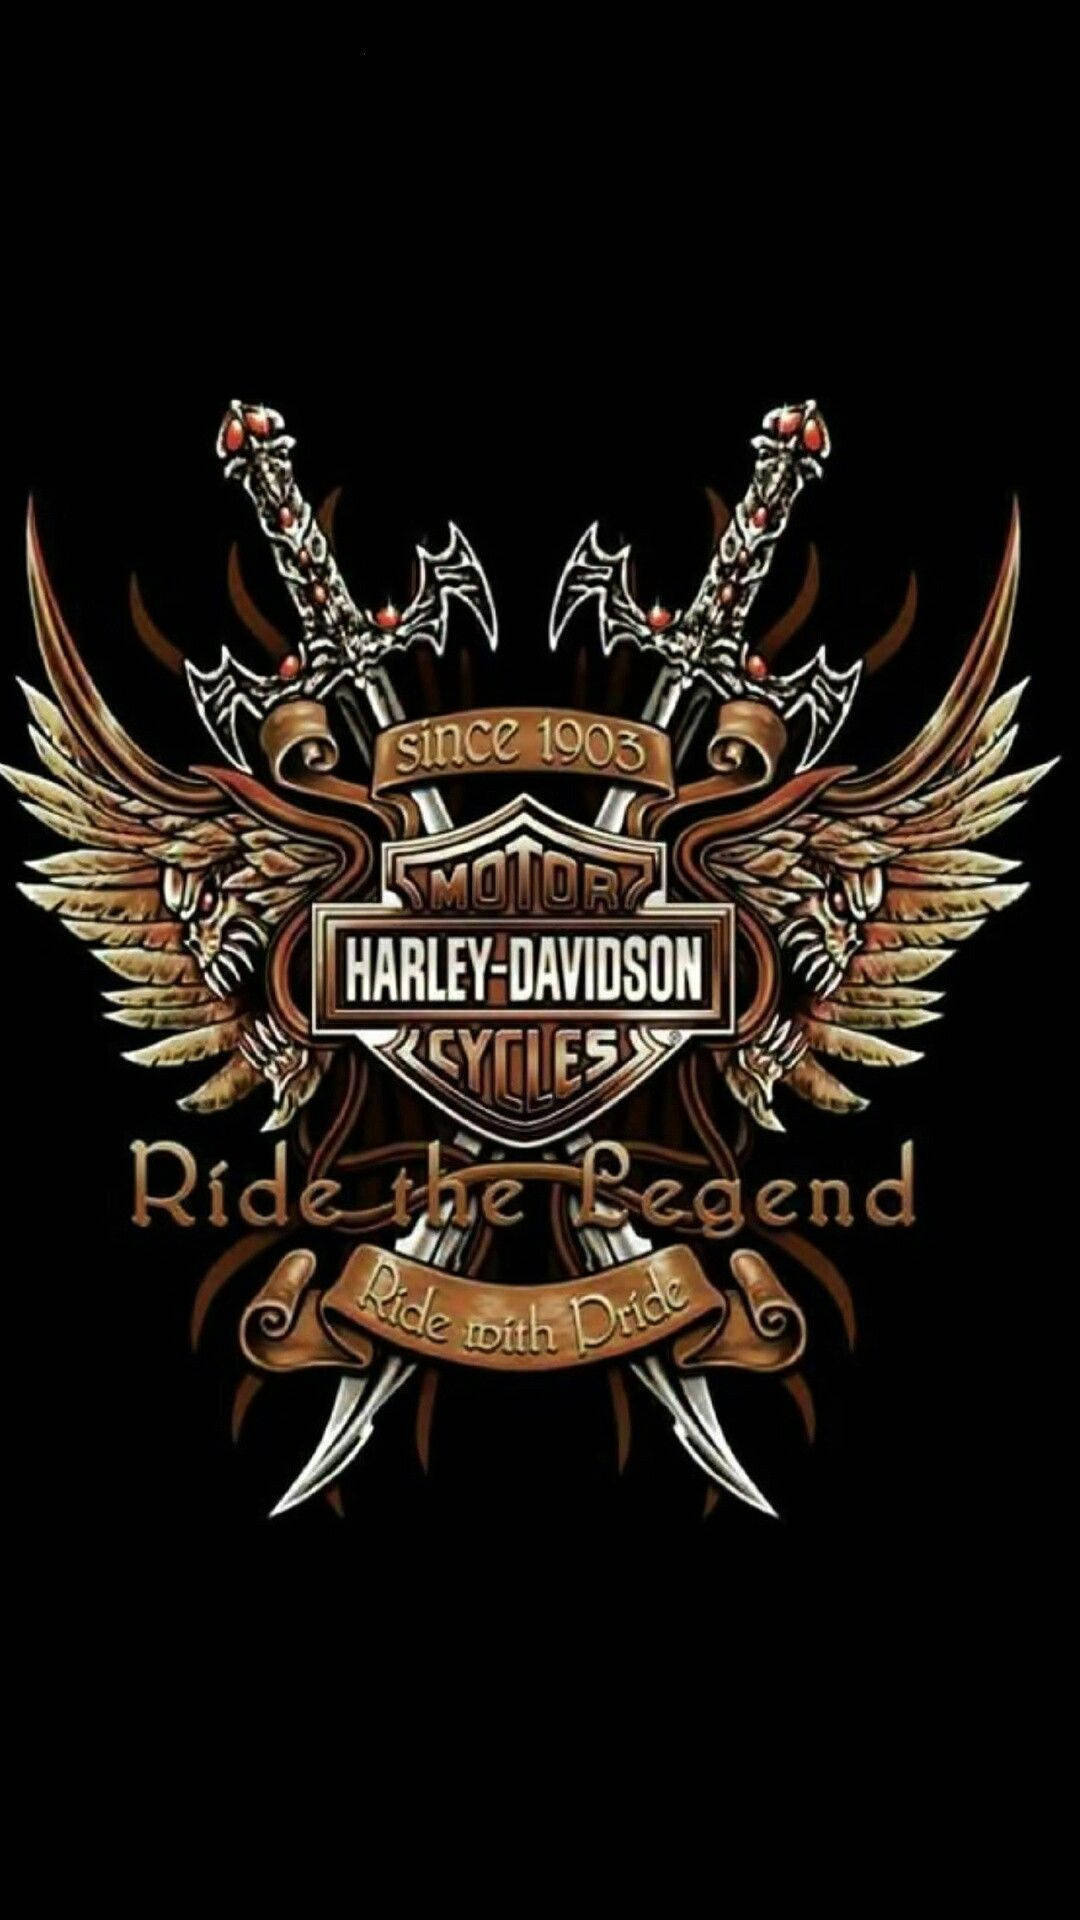 Download Ride With Pride Harley Davidson Logo Wallpaper 